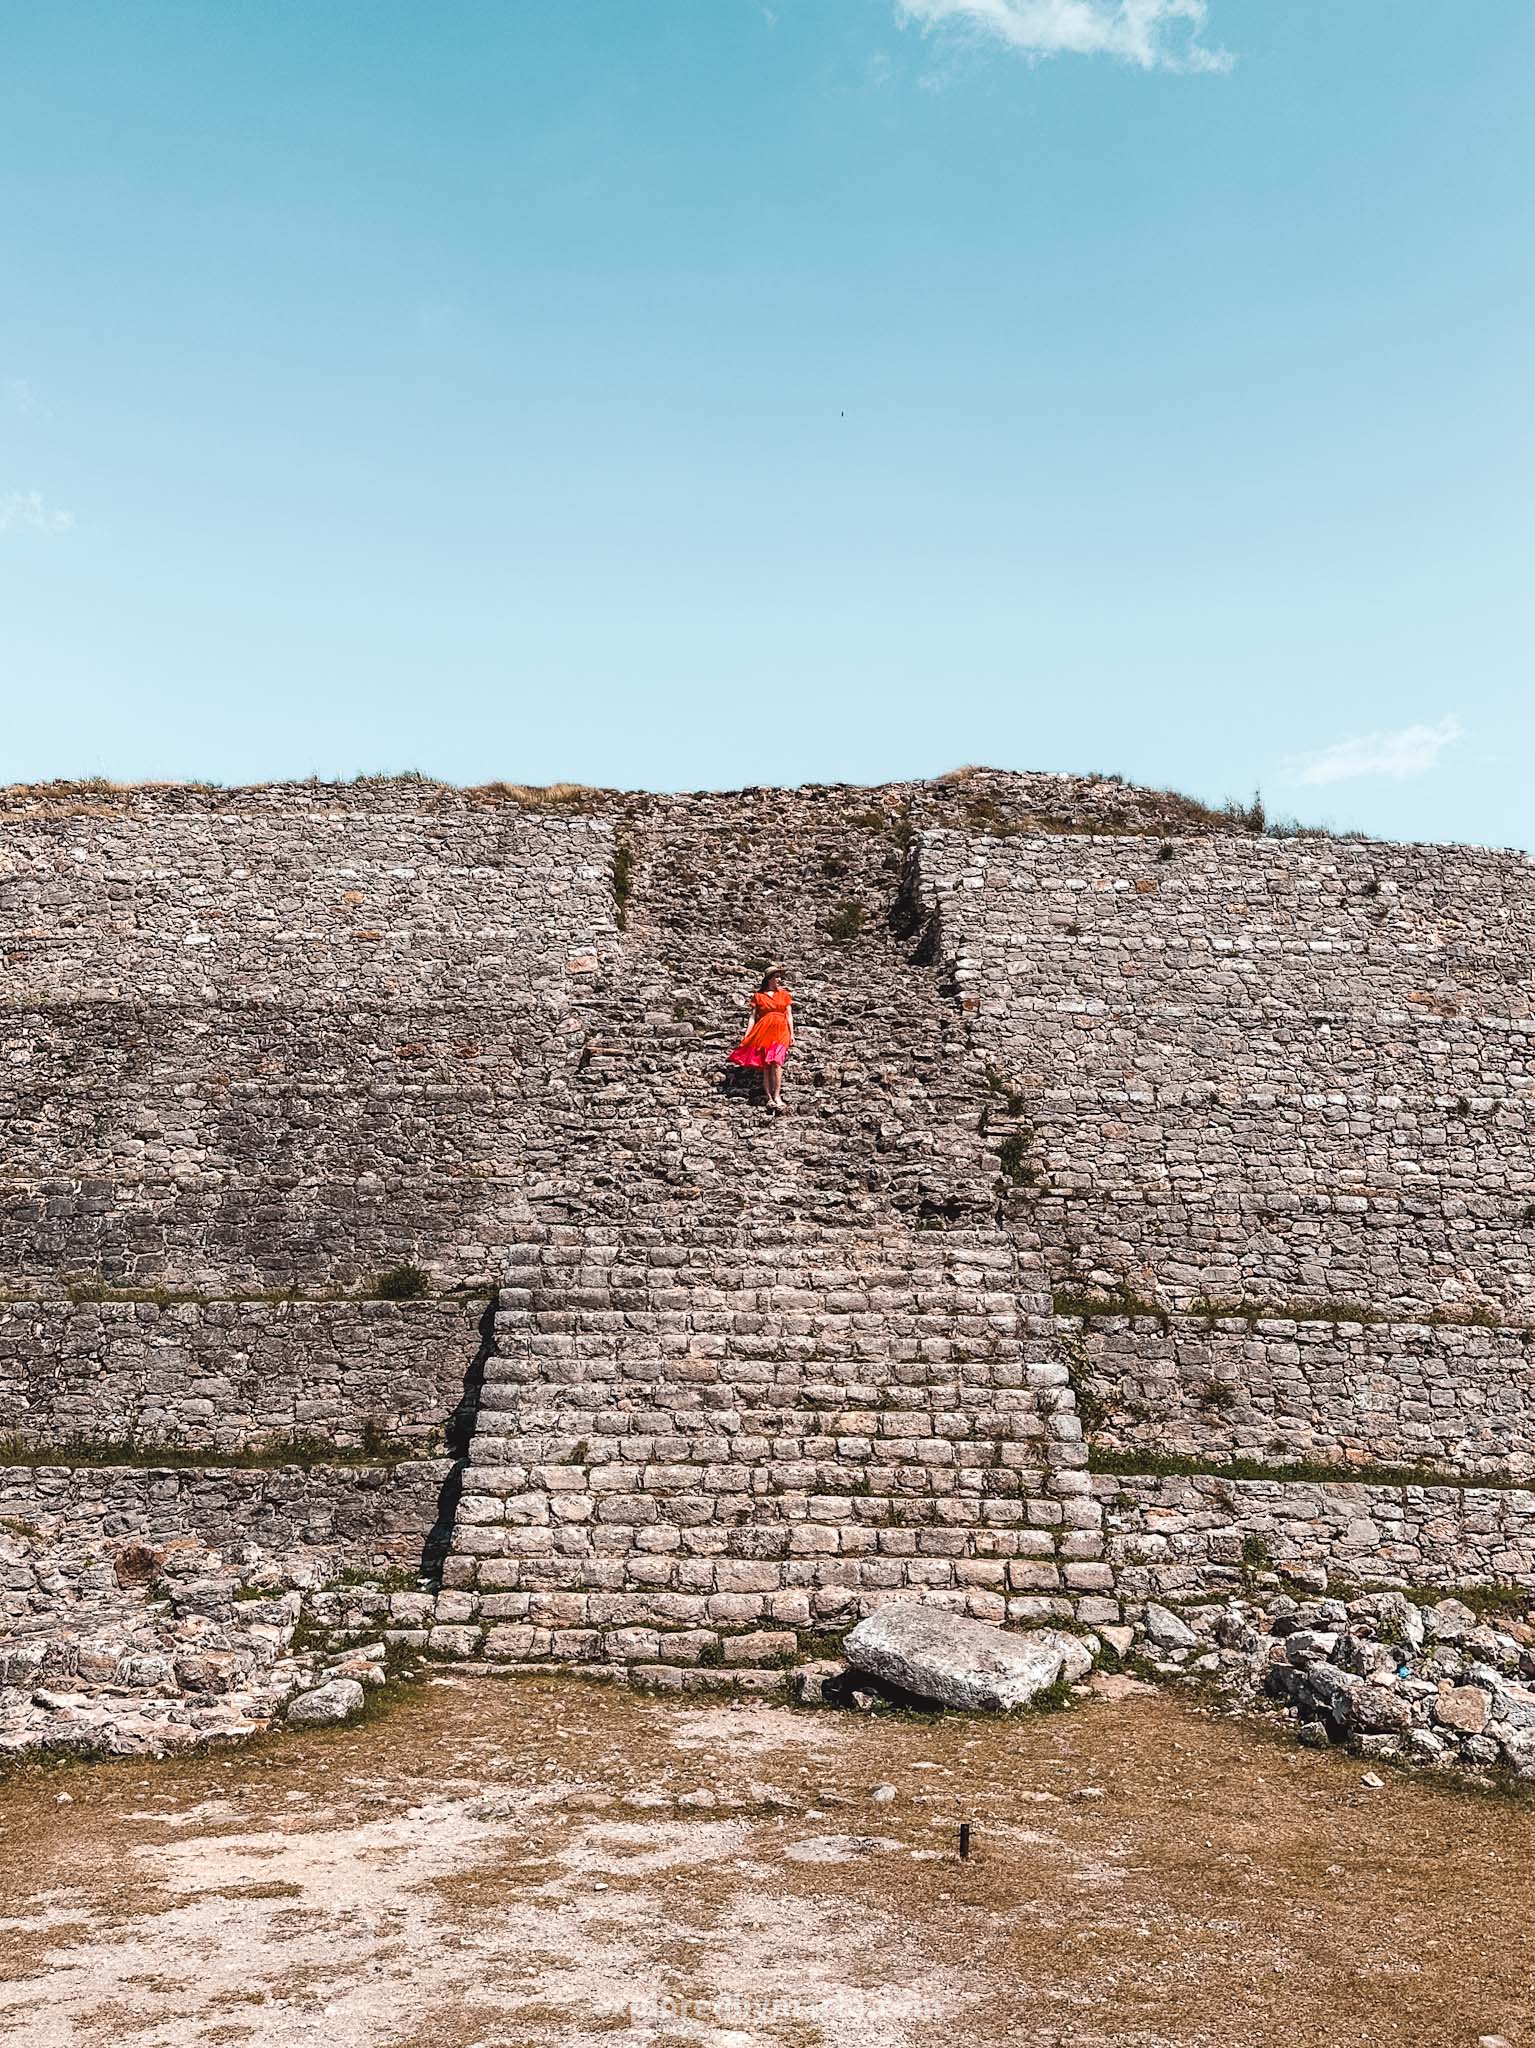 Izamal, Mexico-Kinich Kakmó Pyramid is the largest Mayan pyramid in Izamal and one of the largest Mayan pyramids in Mexico